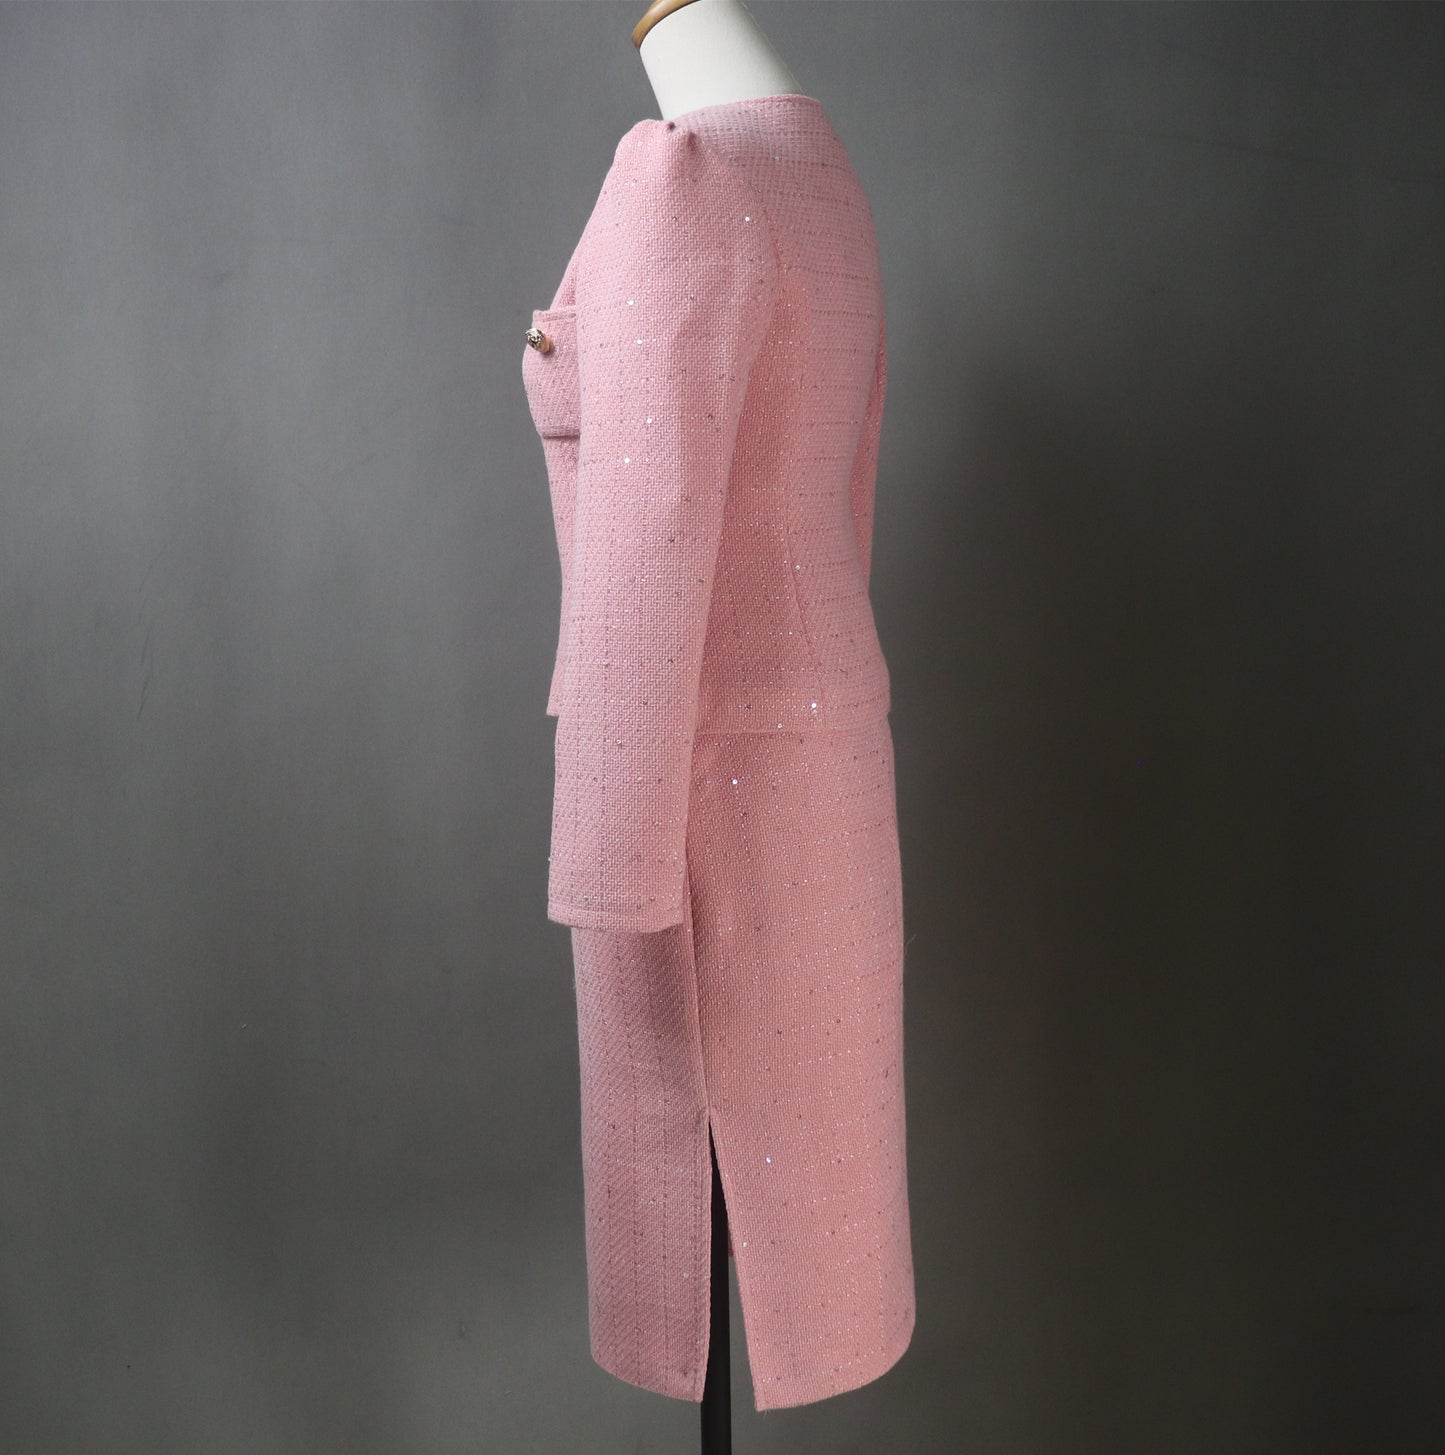 Pink Tweed Midi Skirt Suit with Sequins